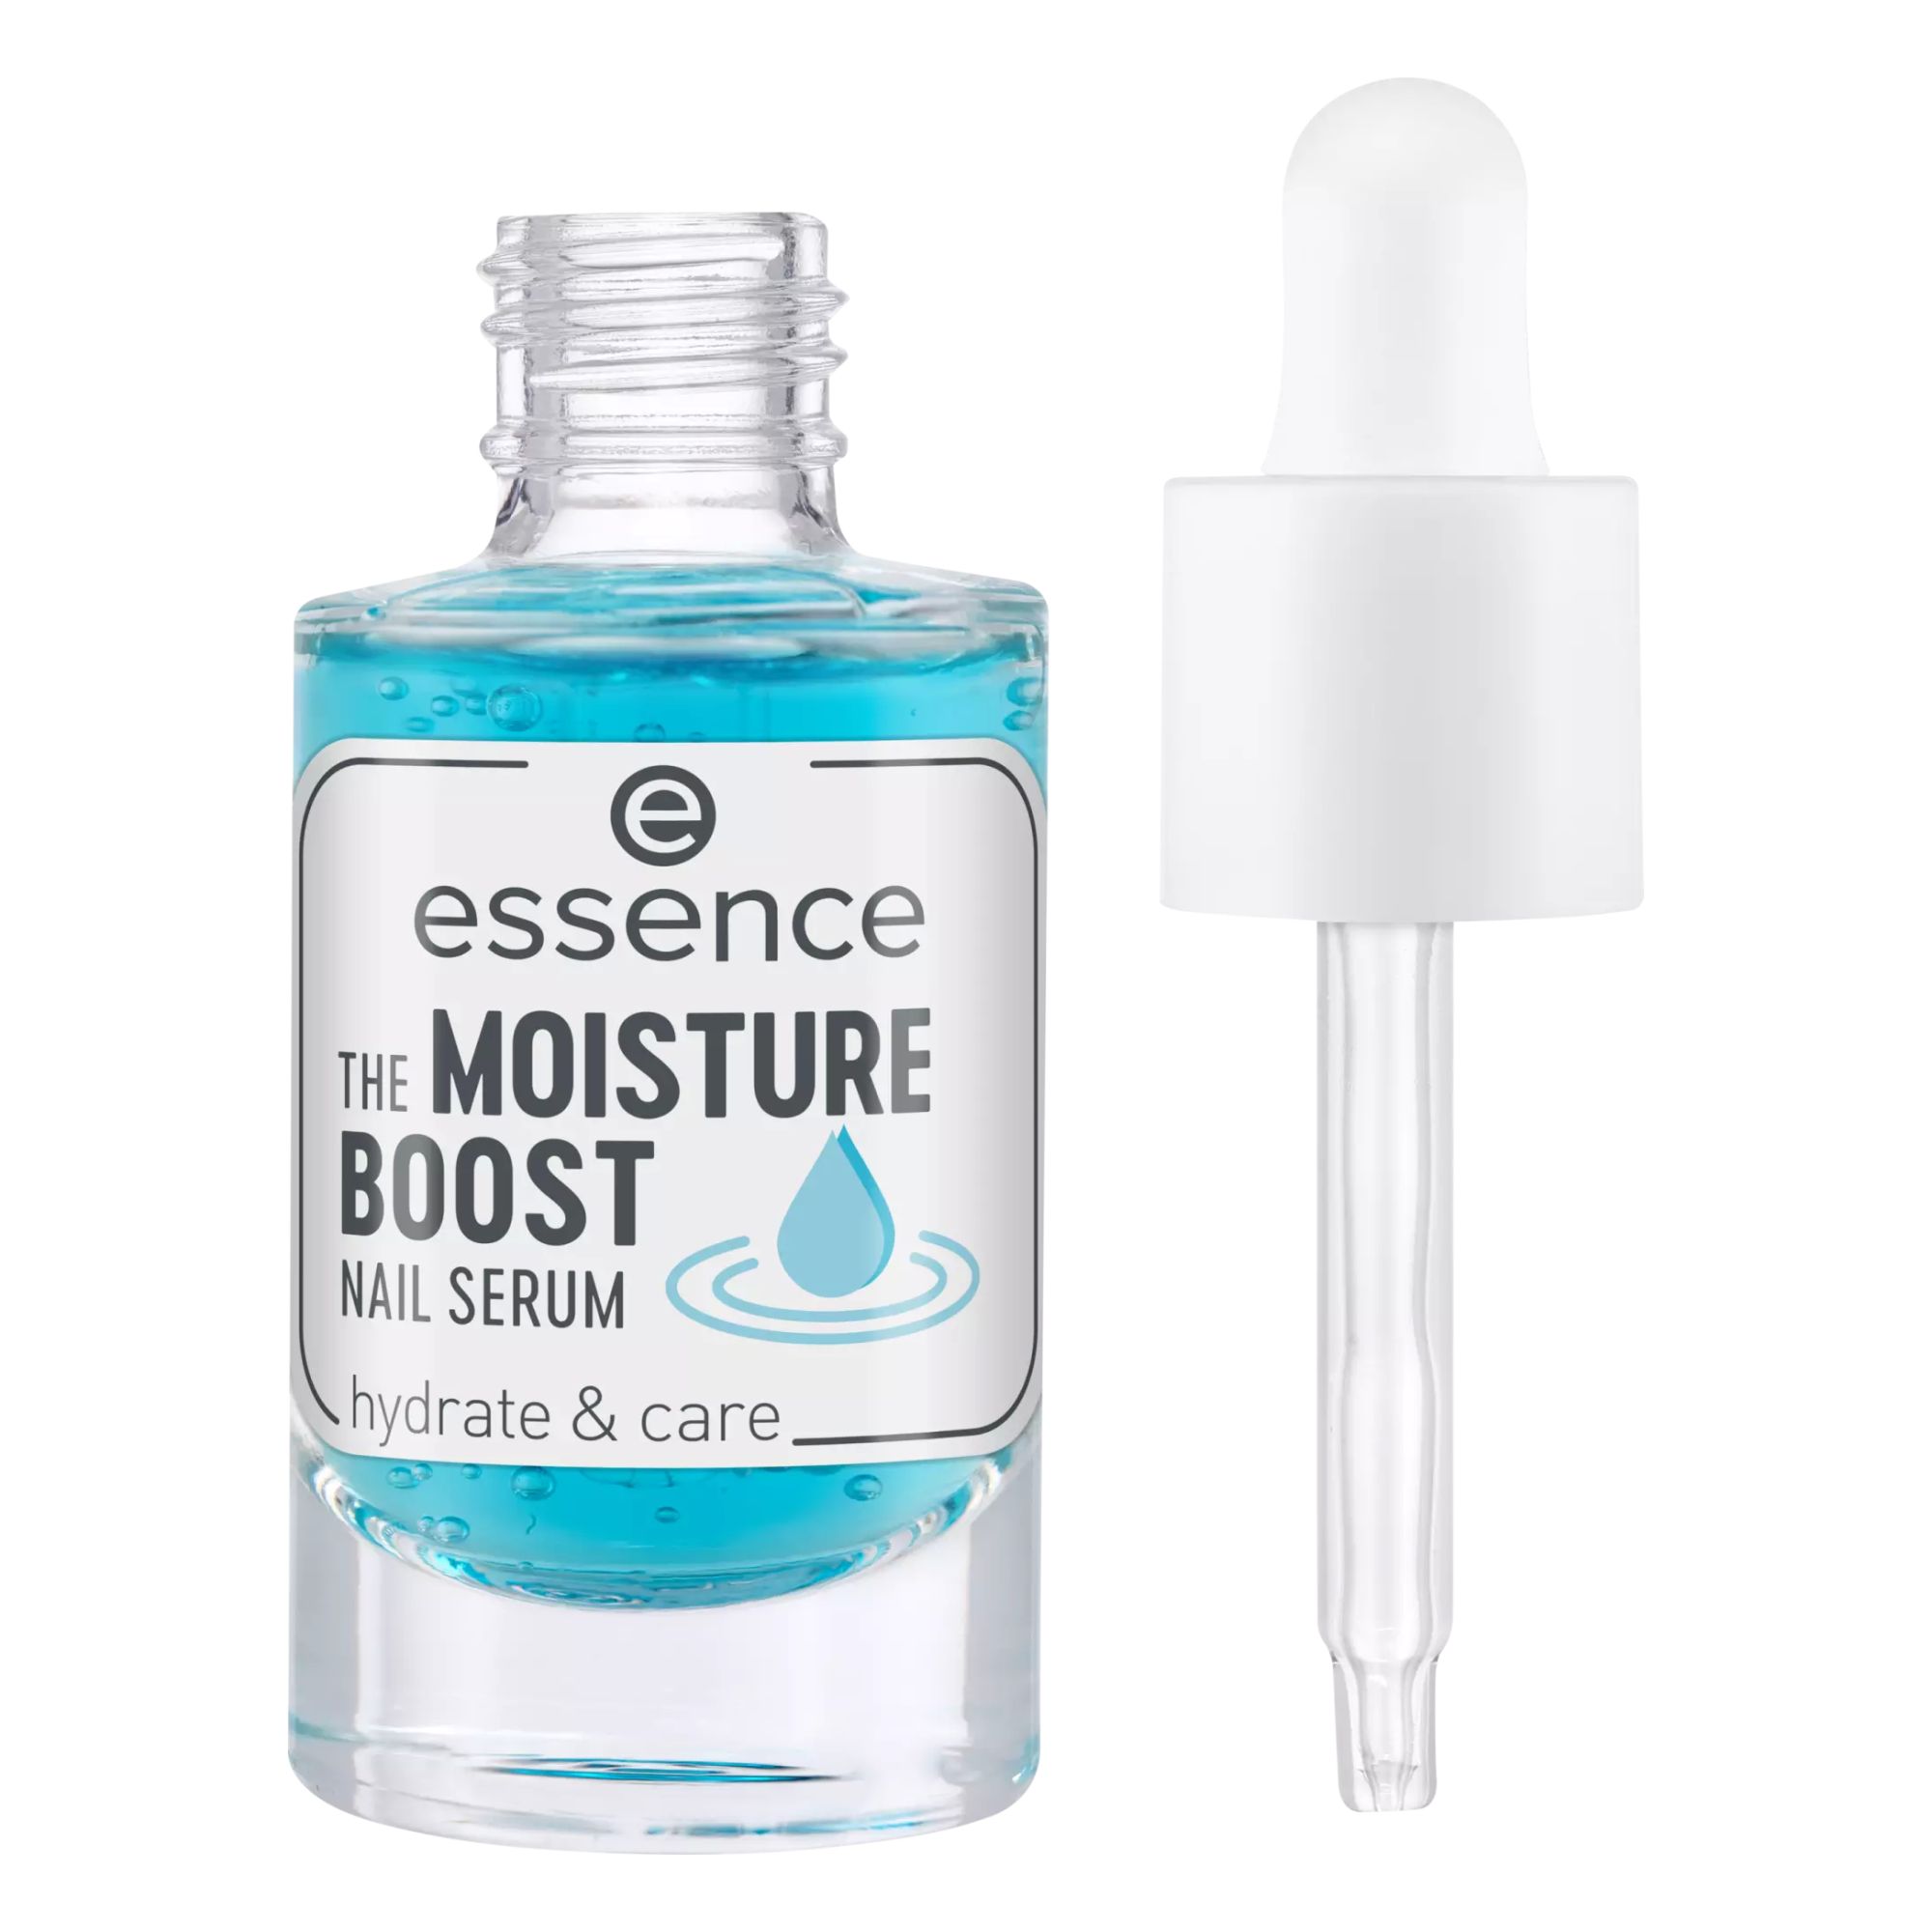 The Moisture Boost Nail Serum